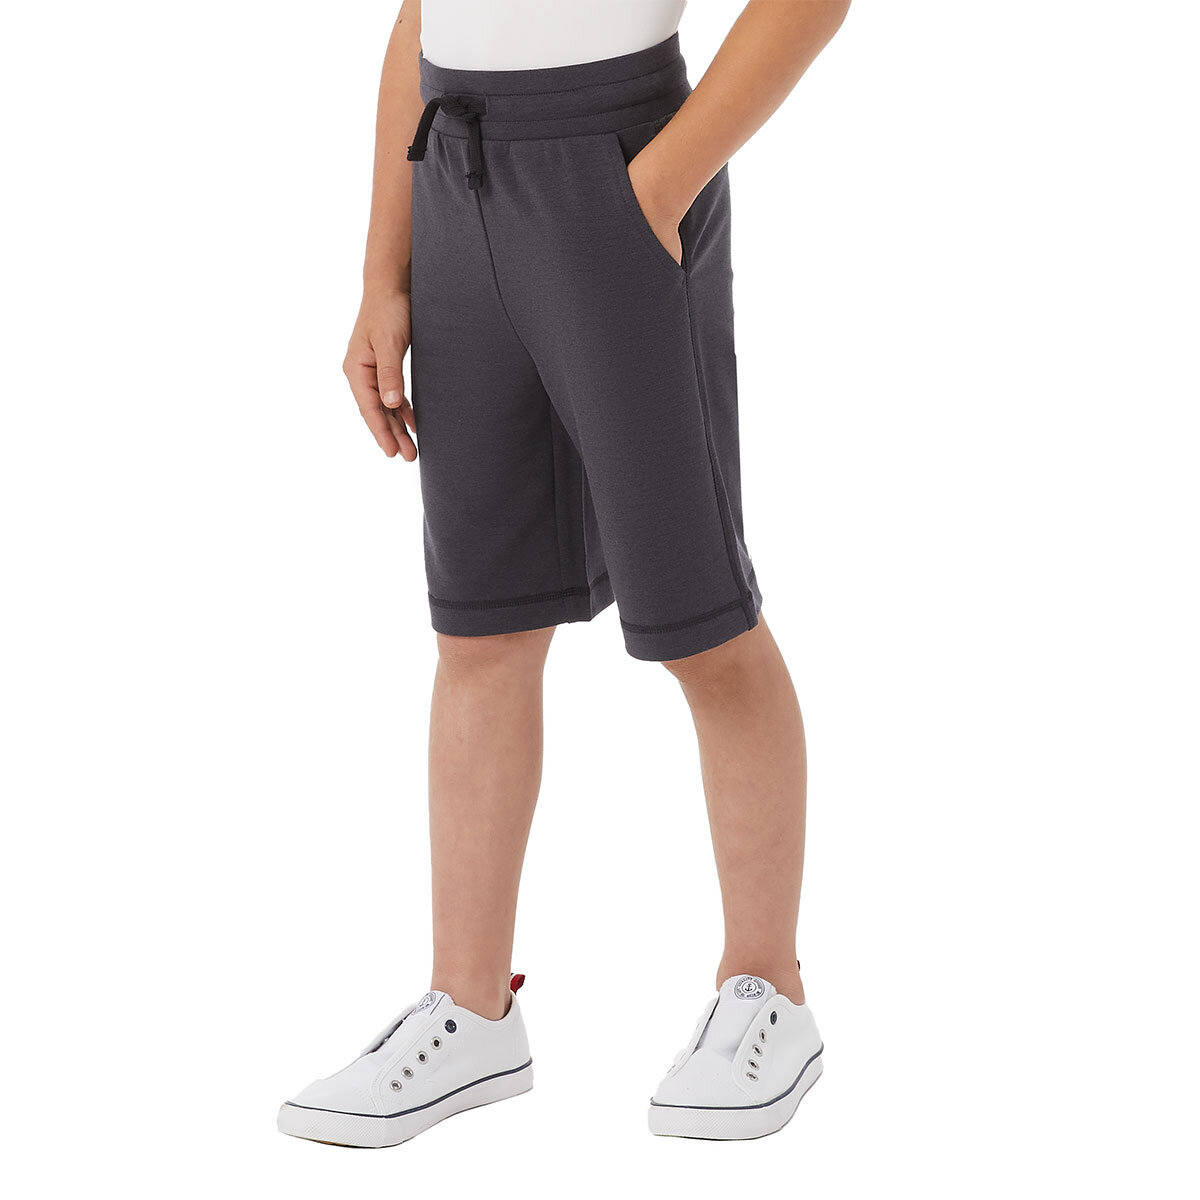 image of side of black shorts